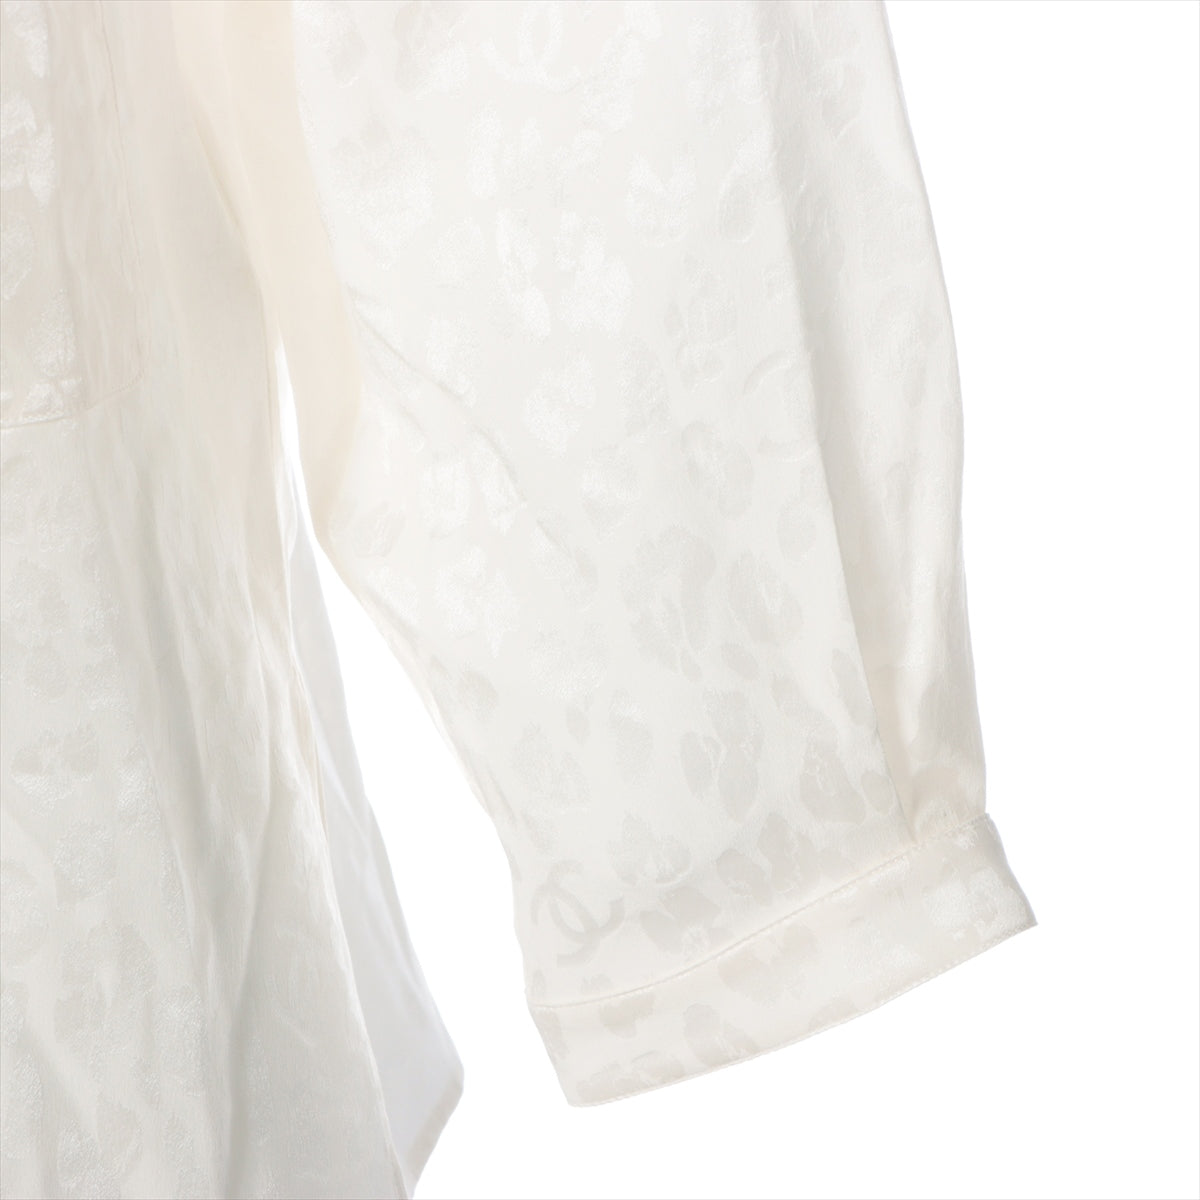 Chanel Coco Button Silk Blouse 38 Ladies' White  P75261V66669